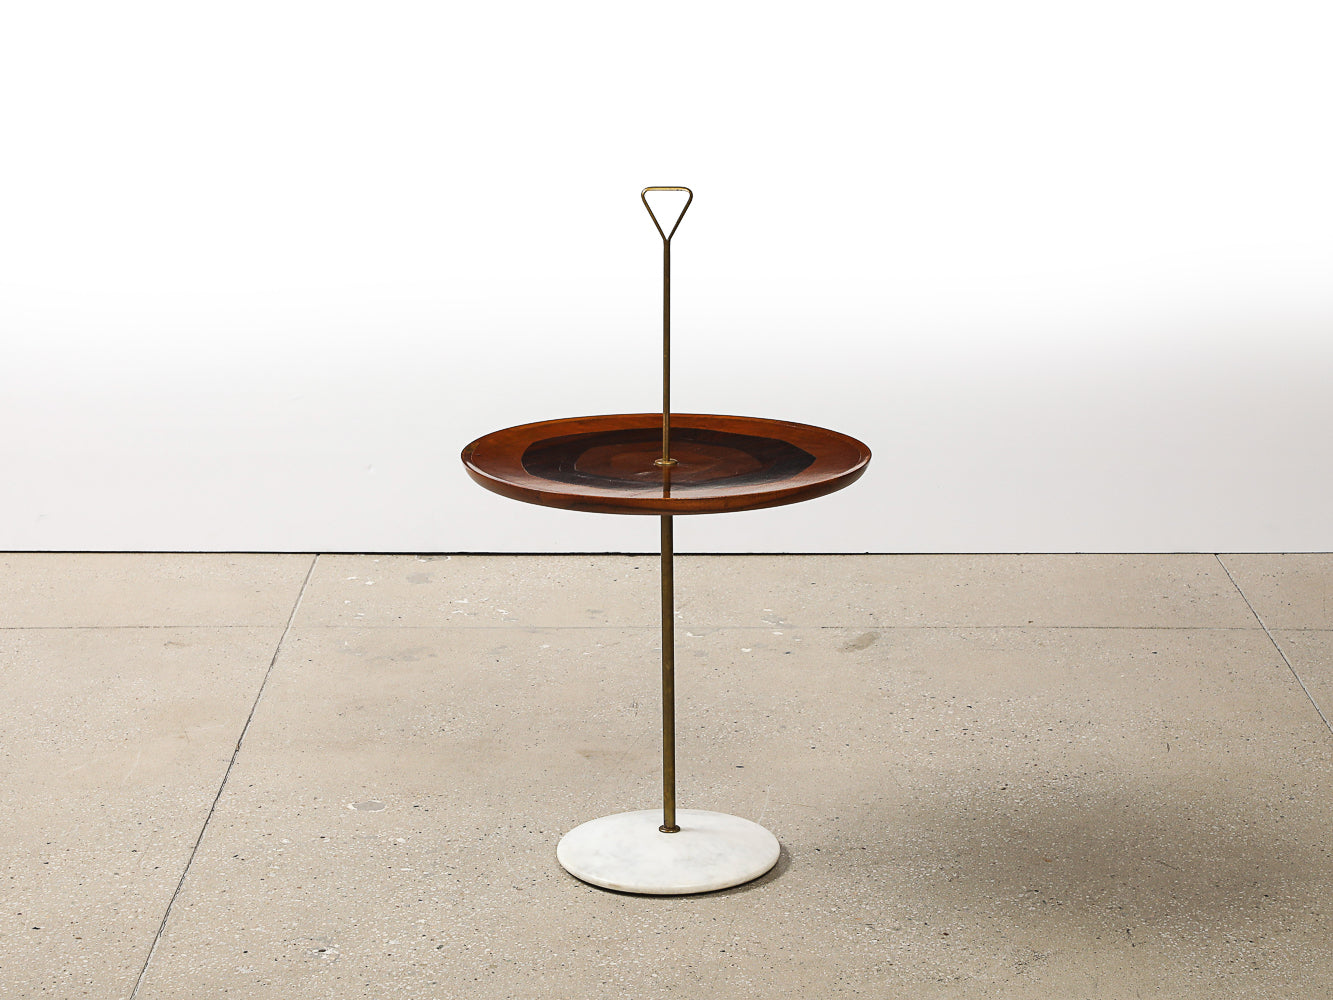 Rare Side Table by Giovanni (Nino) Zoncada